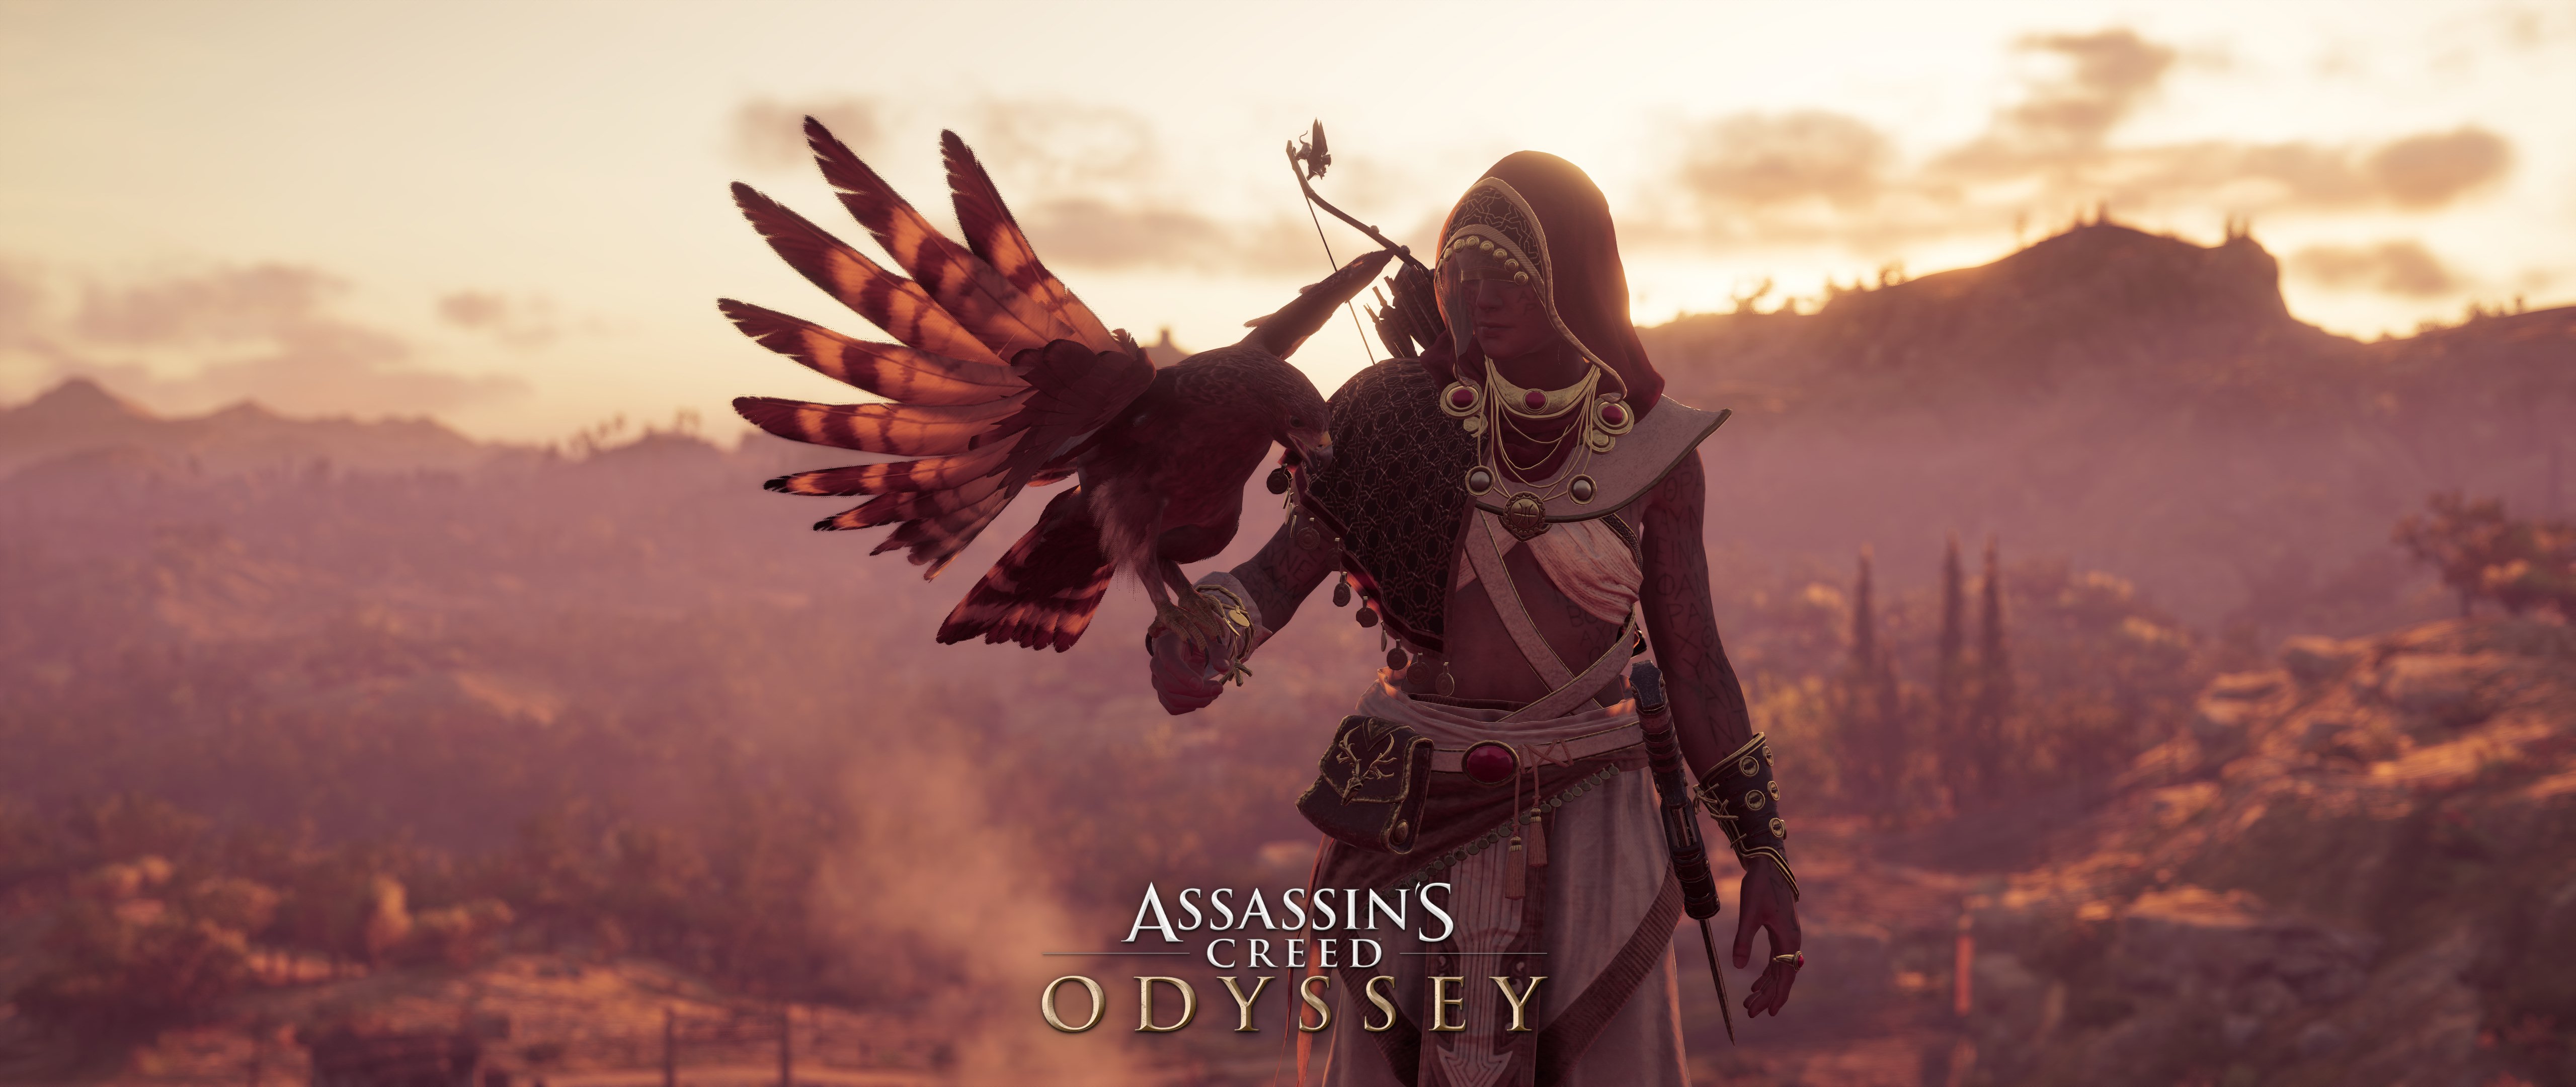 Assassins Creed Assassins Creed Odyssey Kassandra Gold Eagle Ubisoft Video Games Gamer 4Gamers 5120x2160